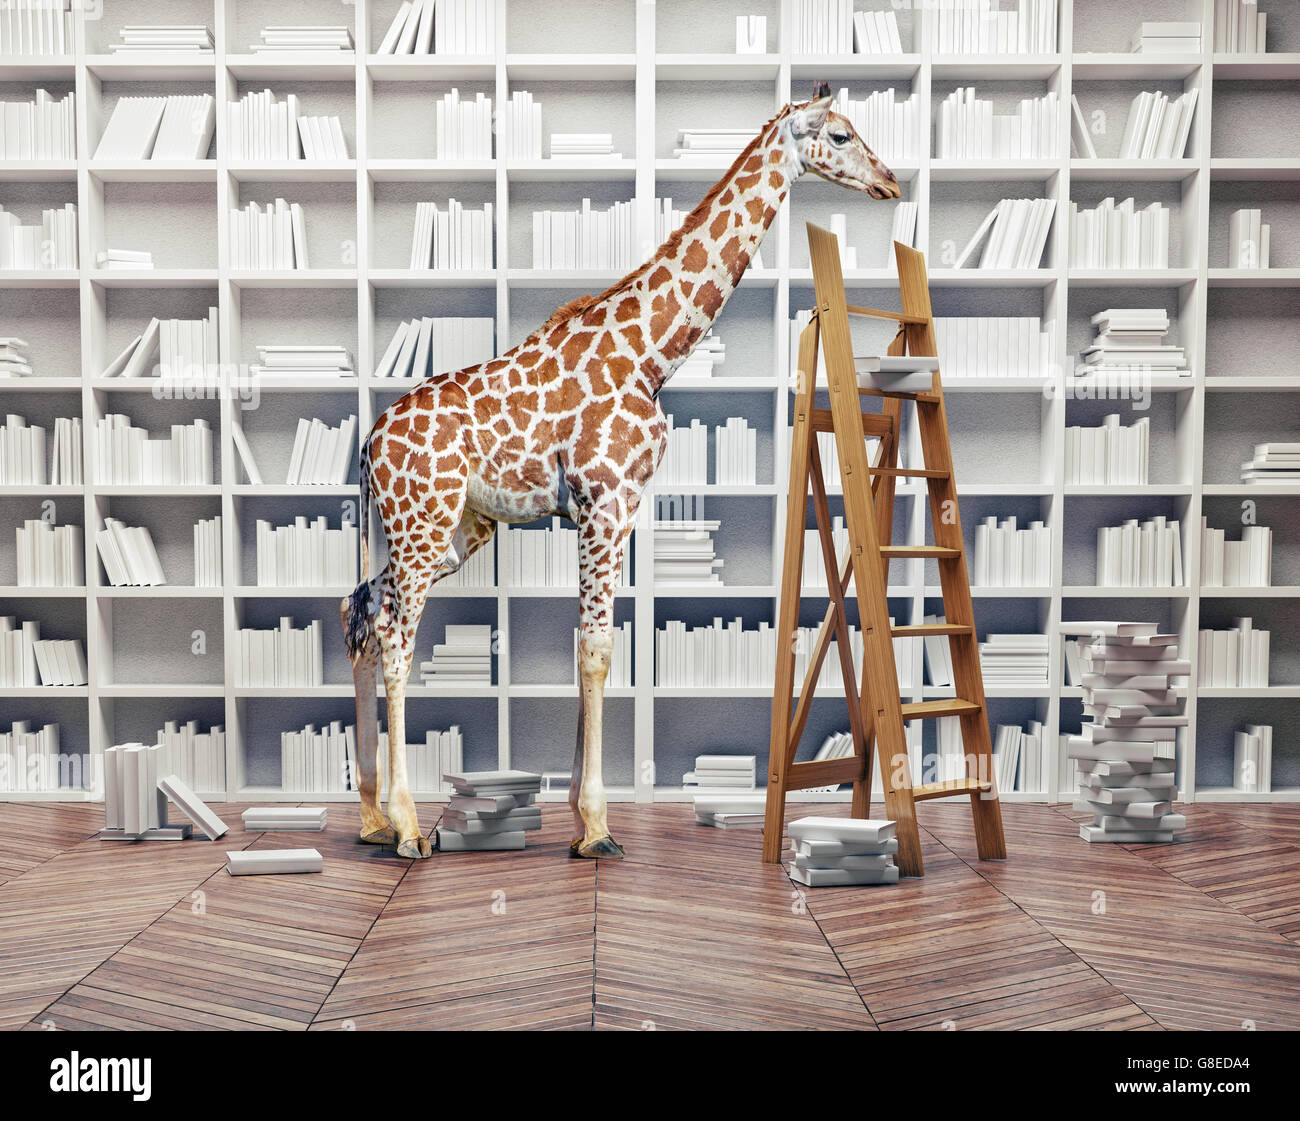 an giraffe baby  in the room with book shelves. Creative concept Stock Photo